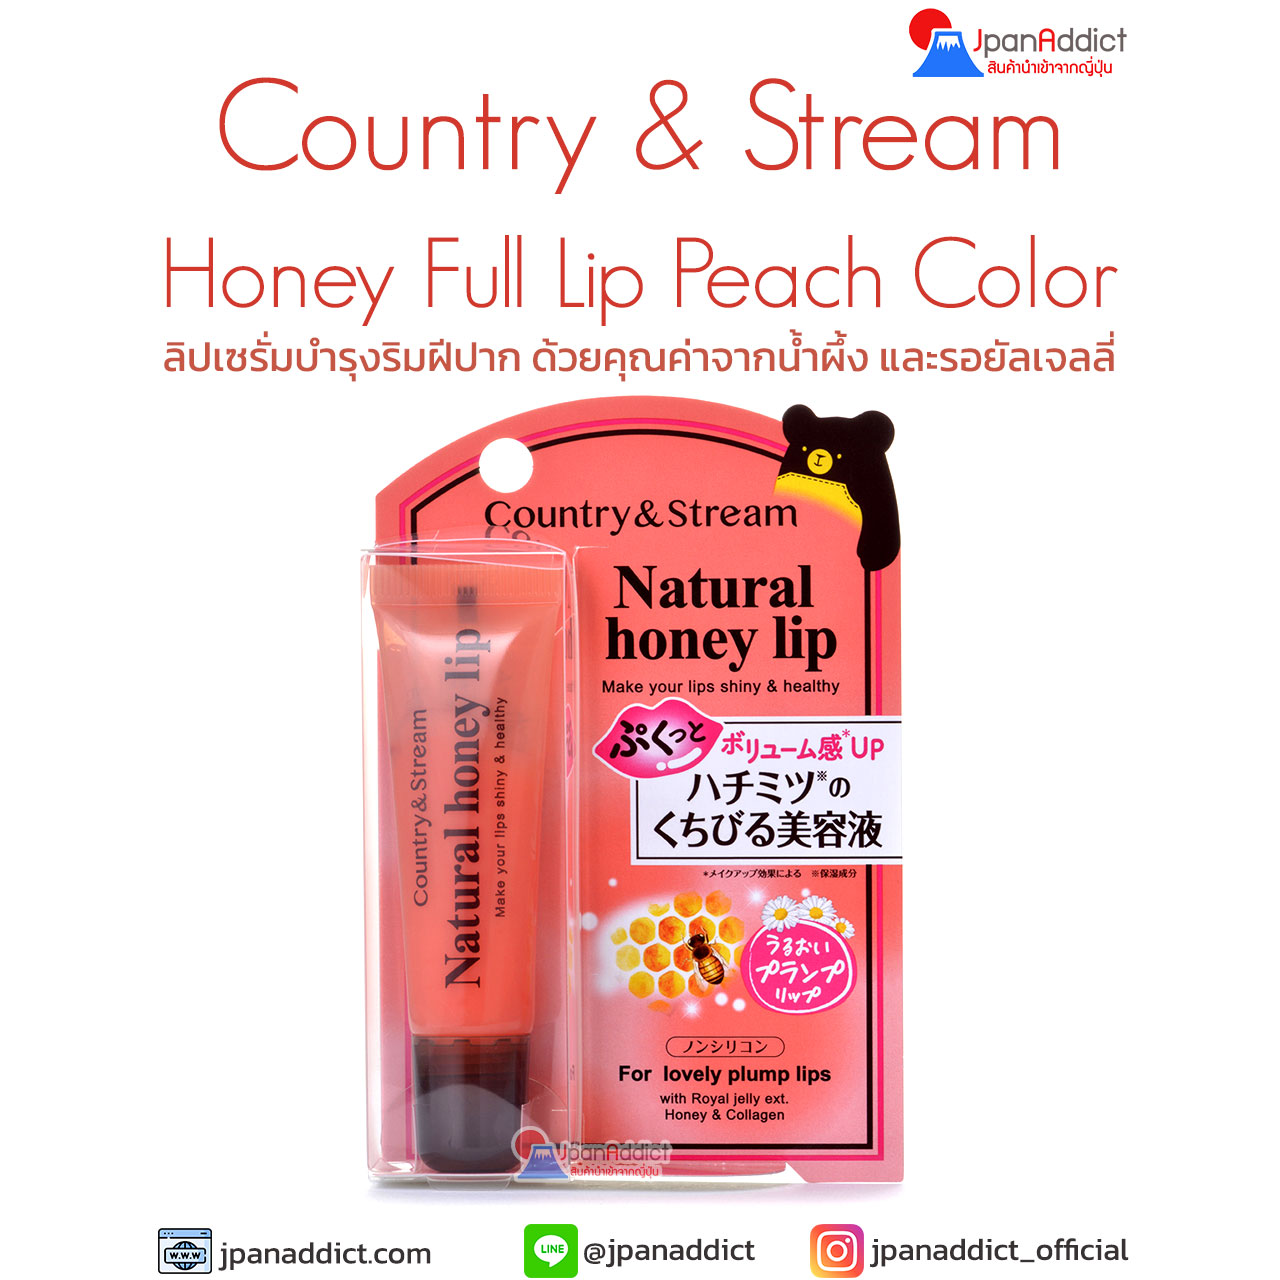 Country & Stream Honey Full Lip Peach Color 10g